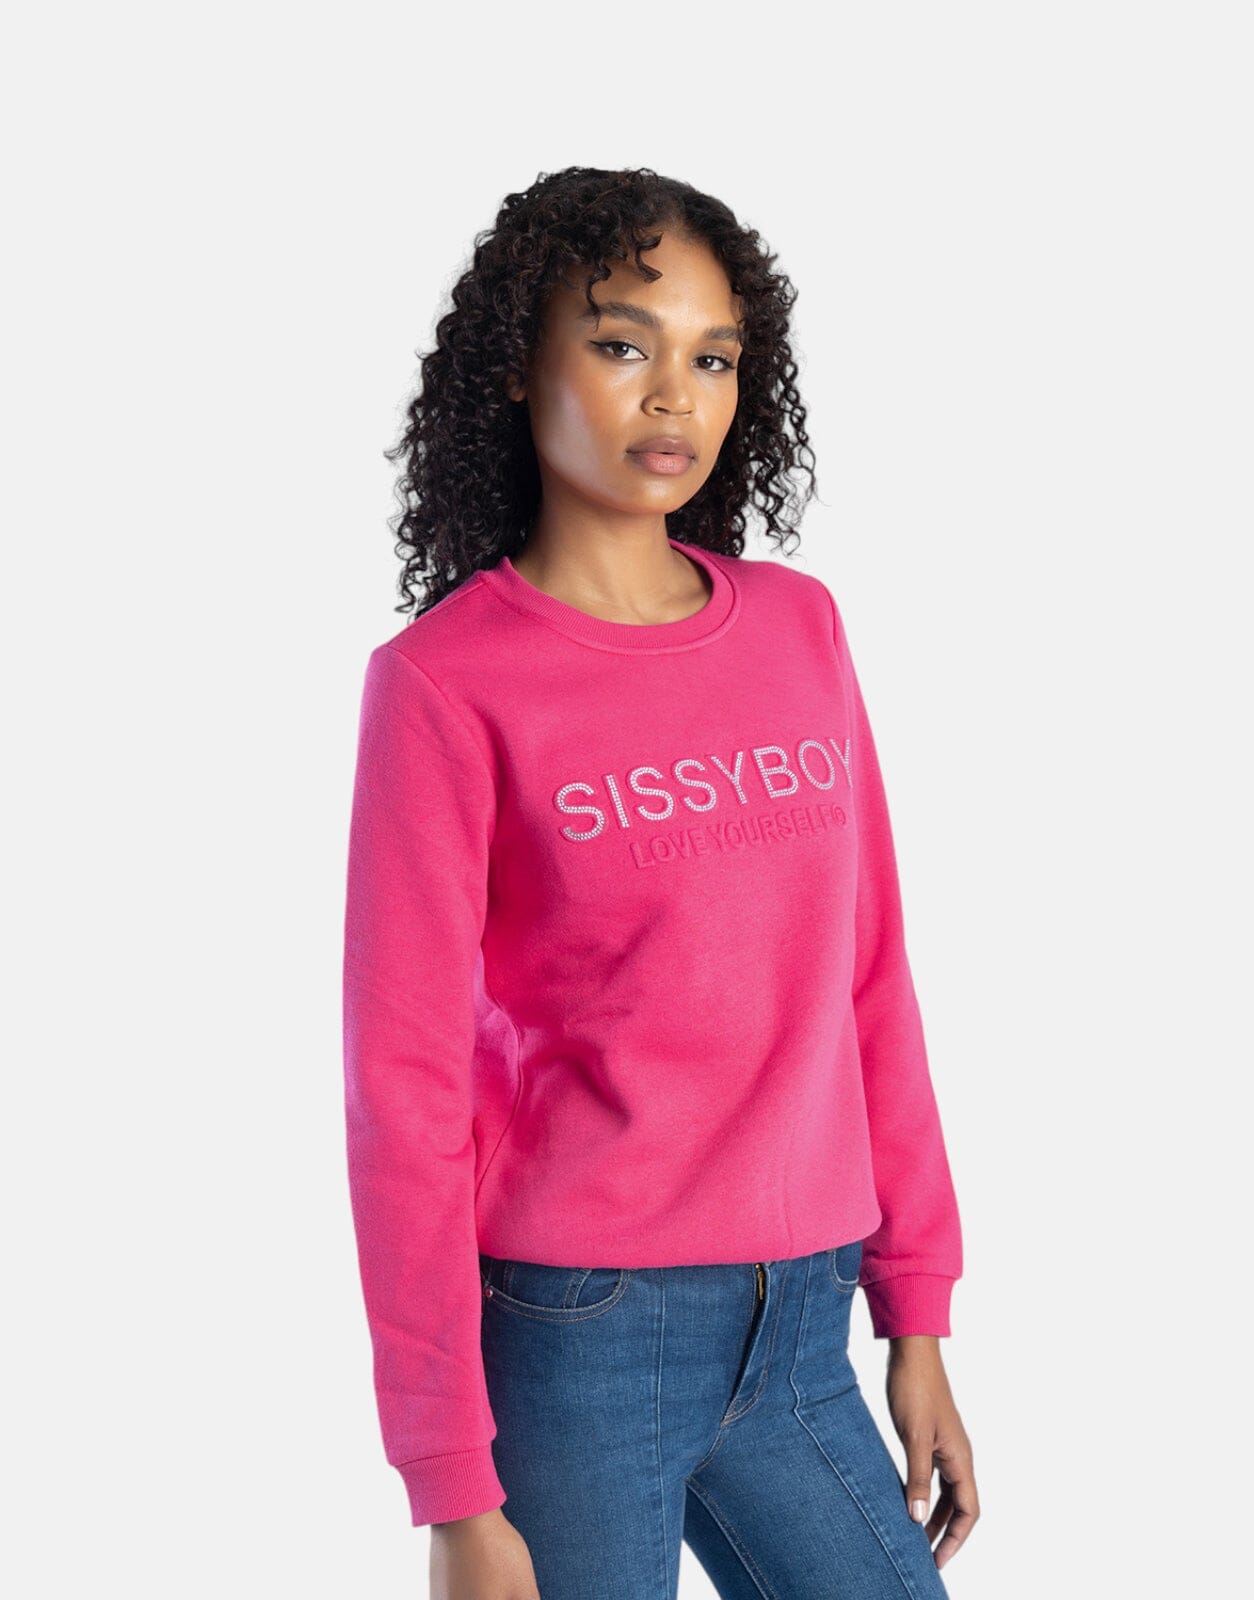 Sissy Boy Bling Embossed Logo Sweatshirt - Subwear